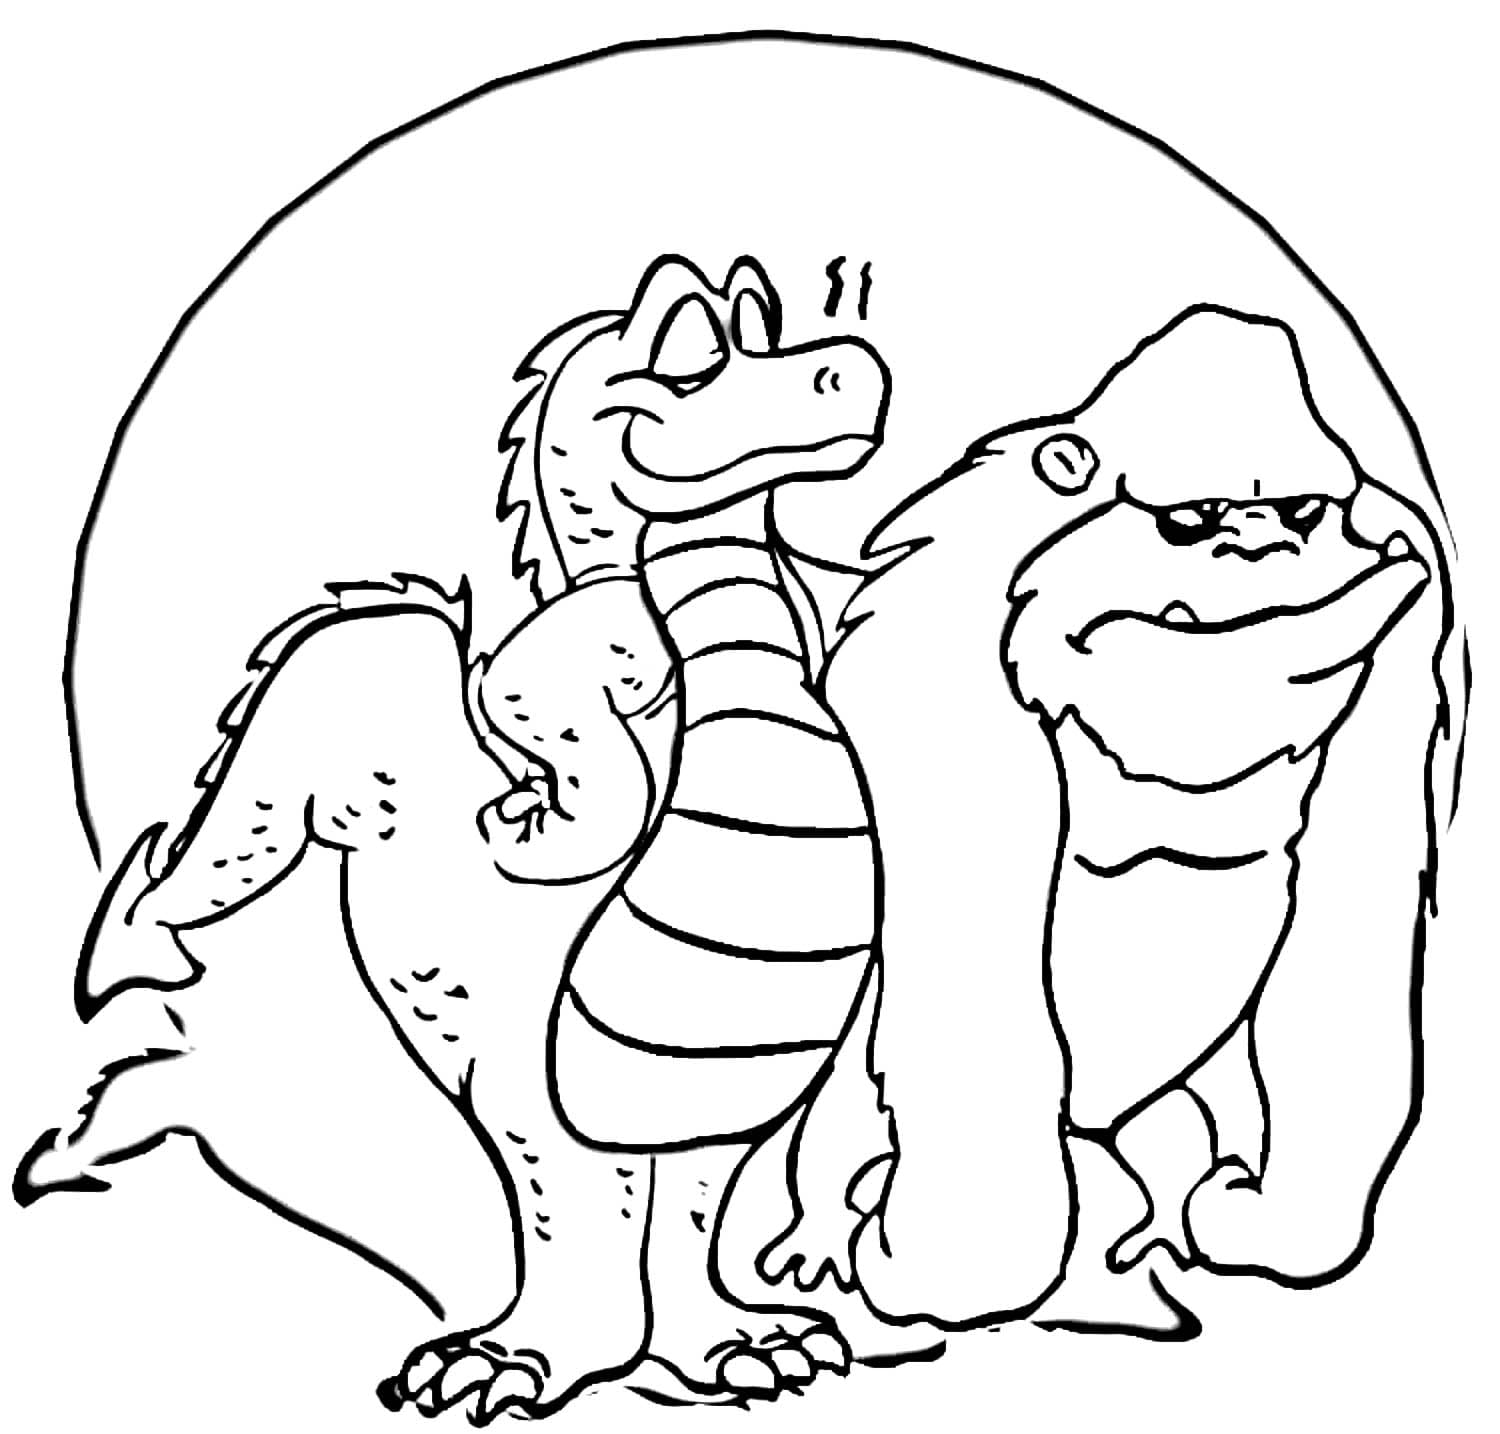 Coloring page Godzilla and King kong for kids